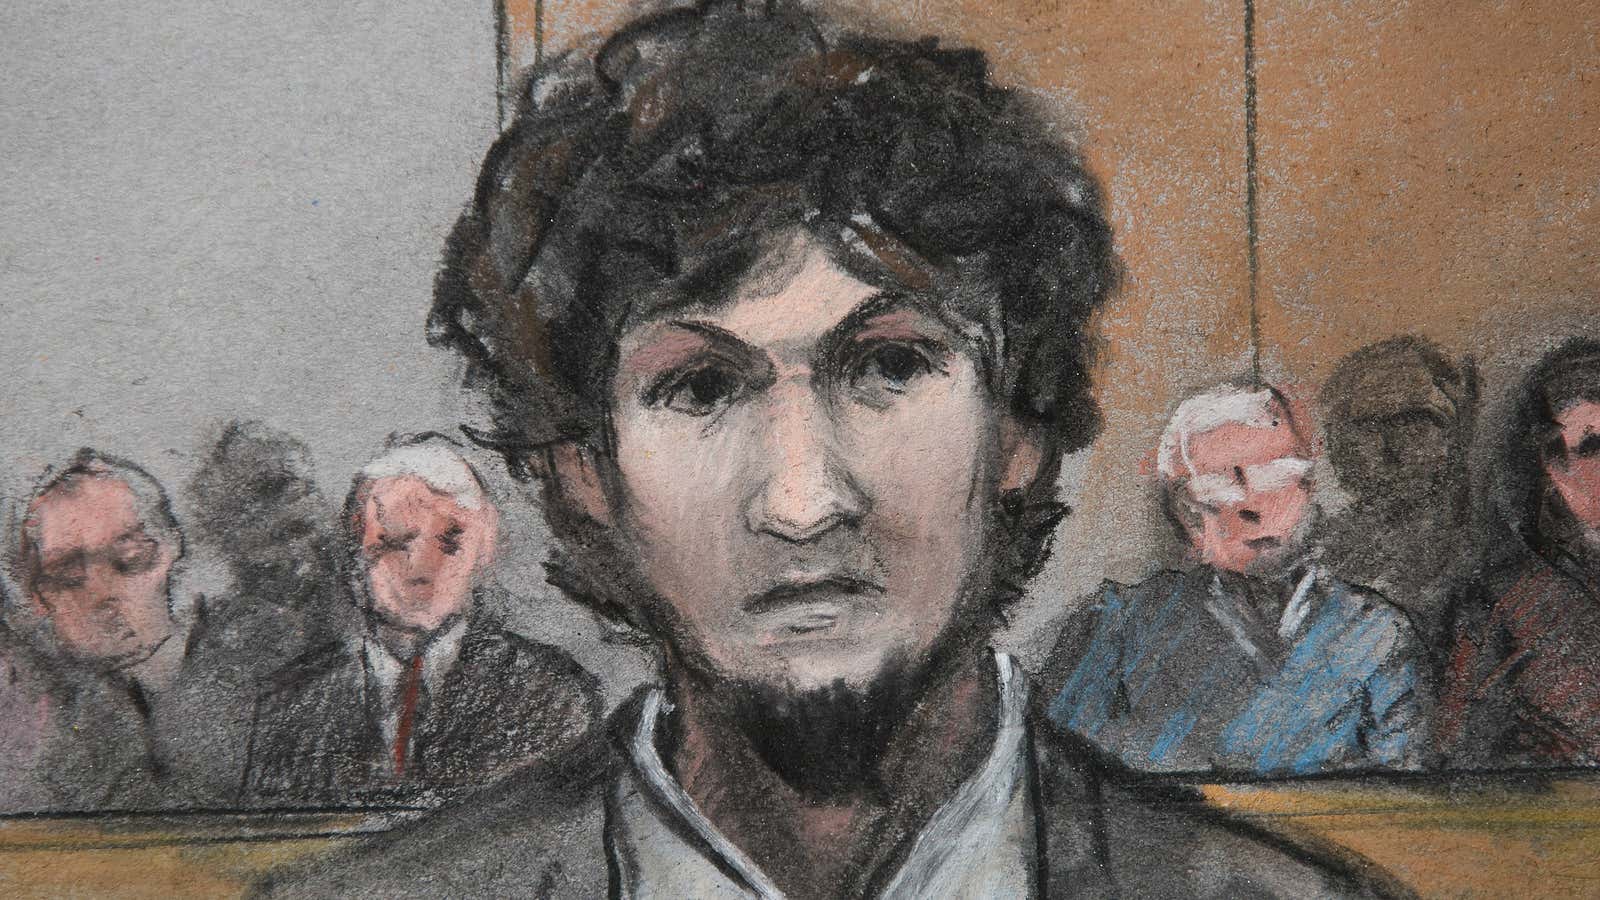 A courtroom sketch of convicted Boston Marathon bomber Dzokhar Tsarnaev.